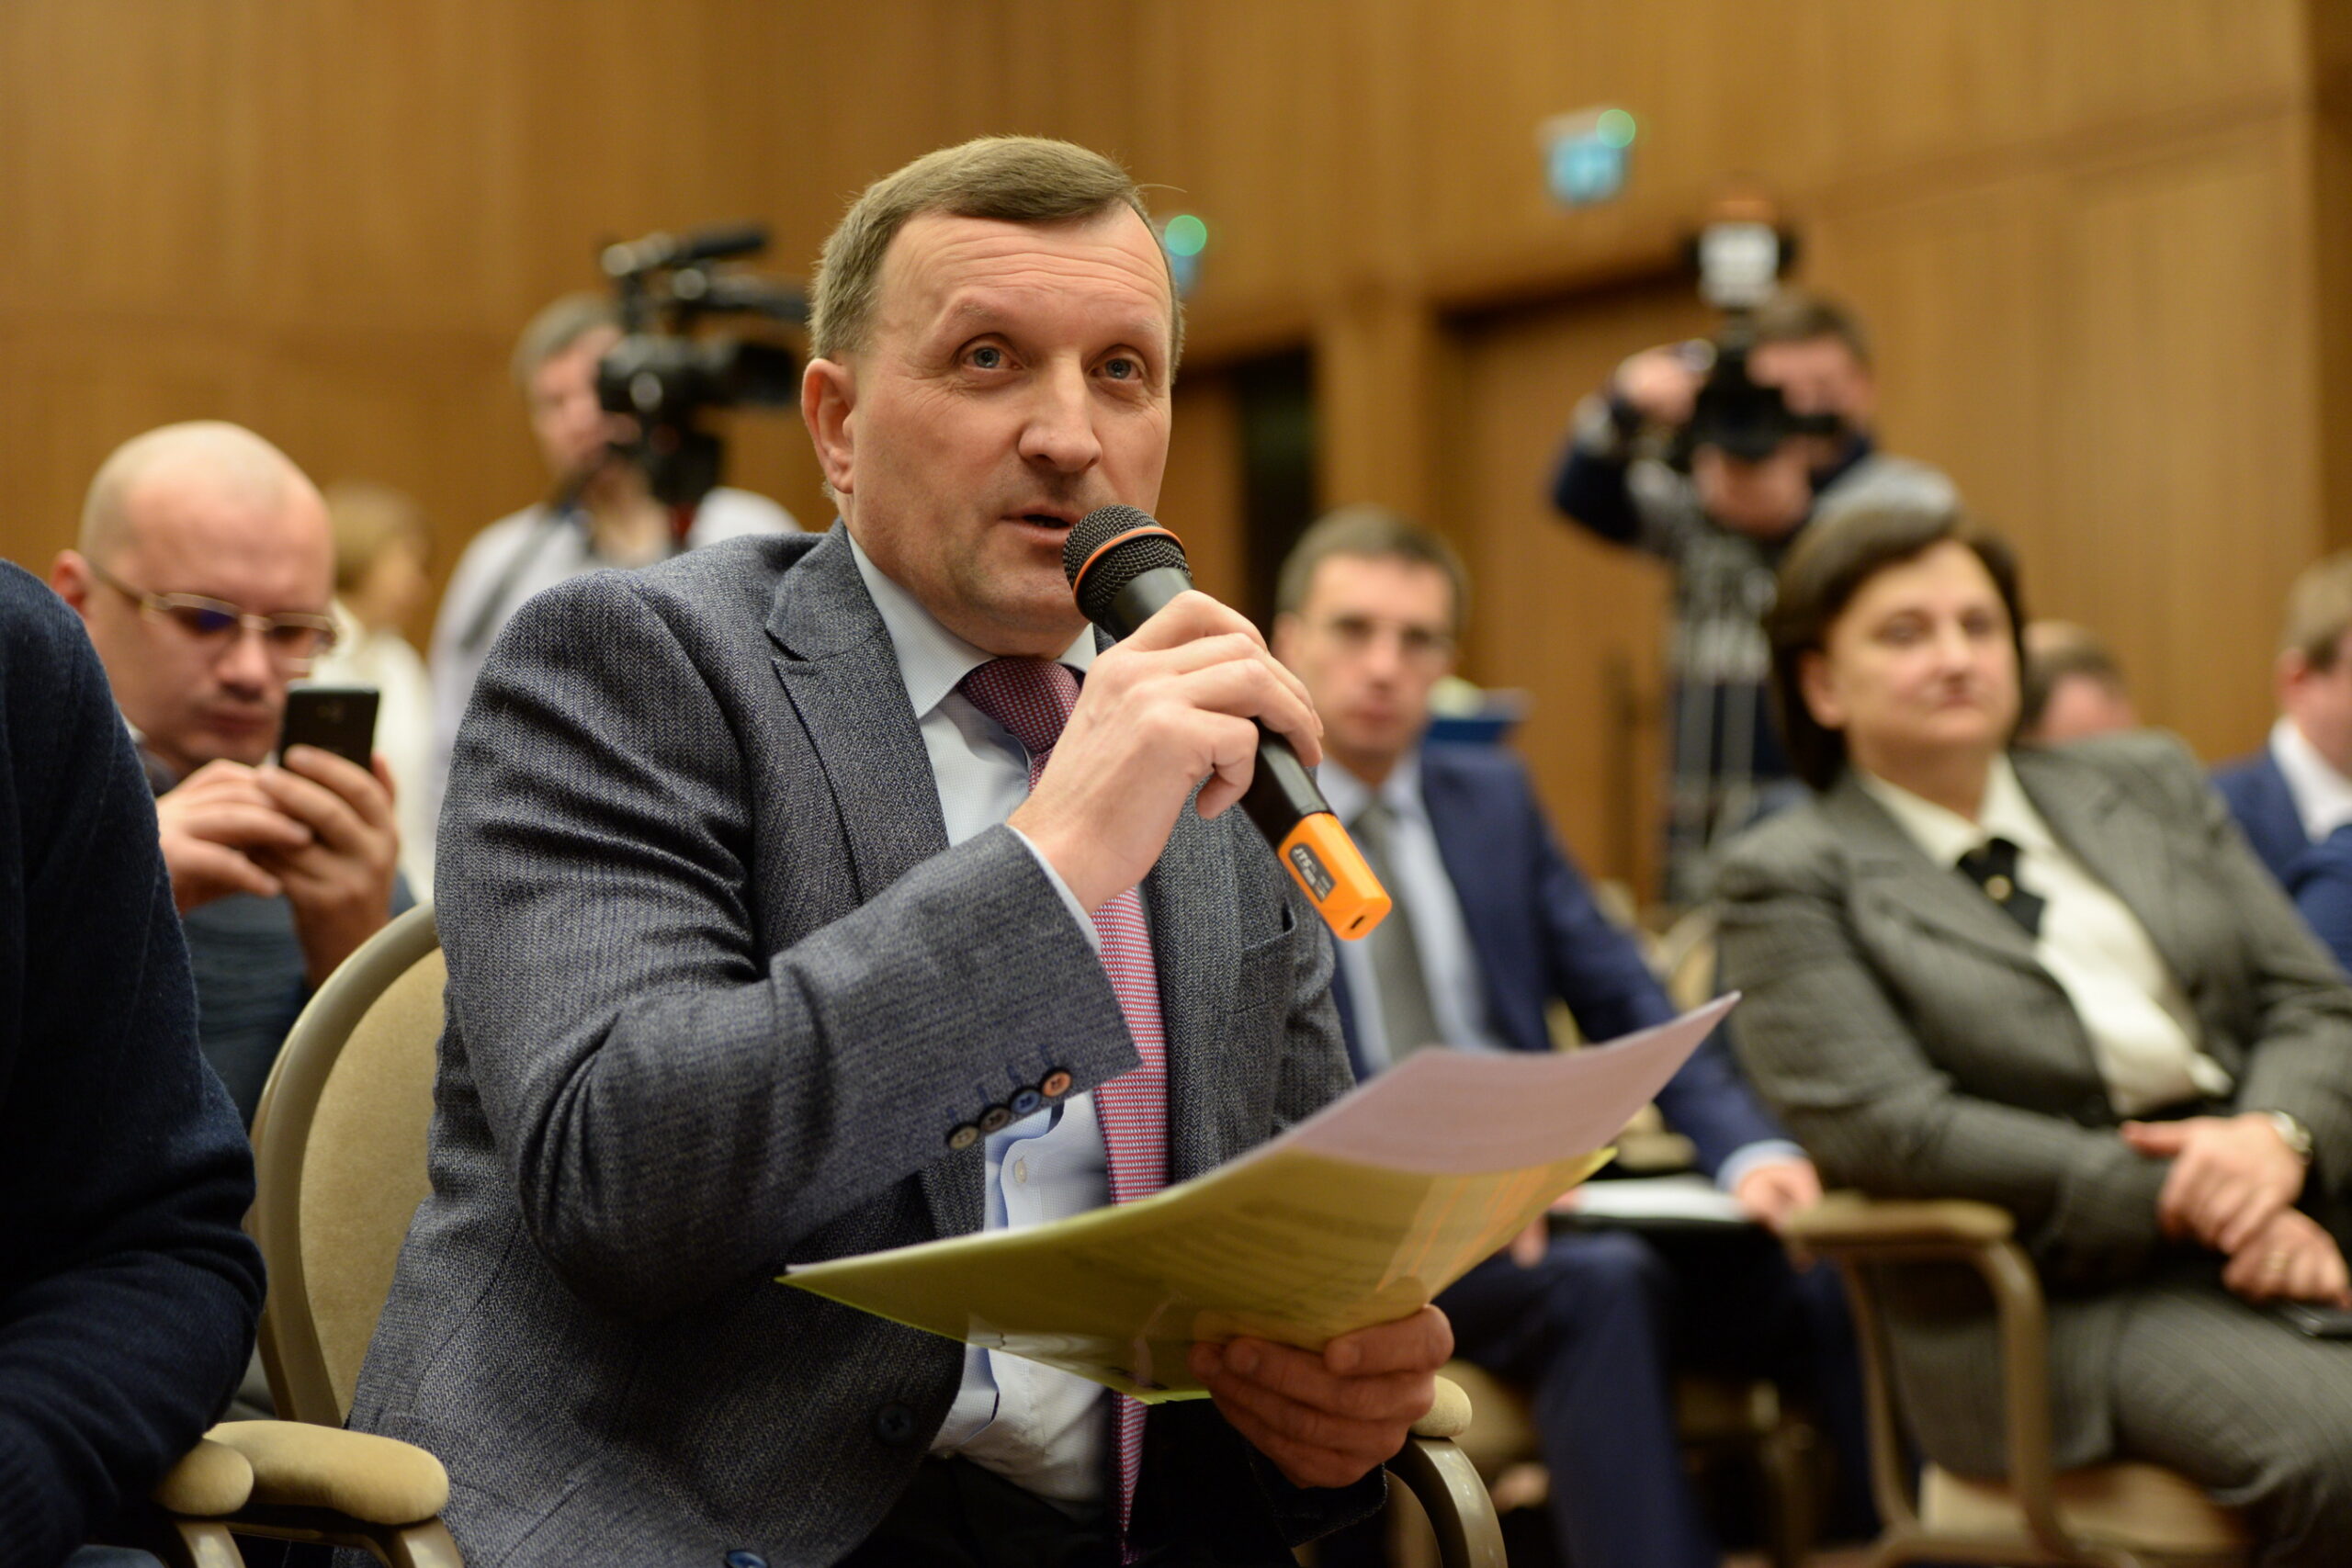 Yaroslav Romanchuk took part in the tax reform debate